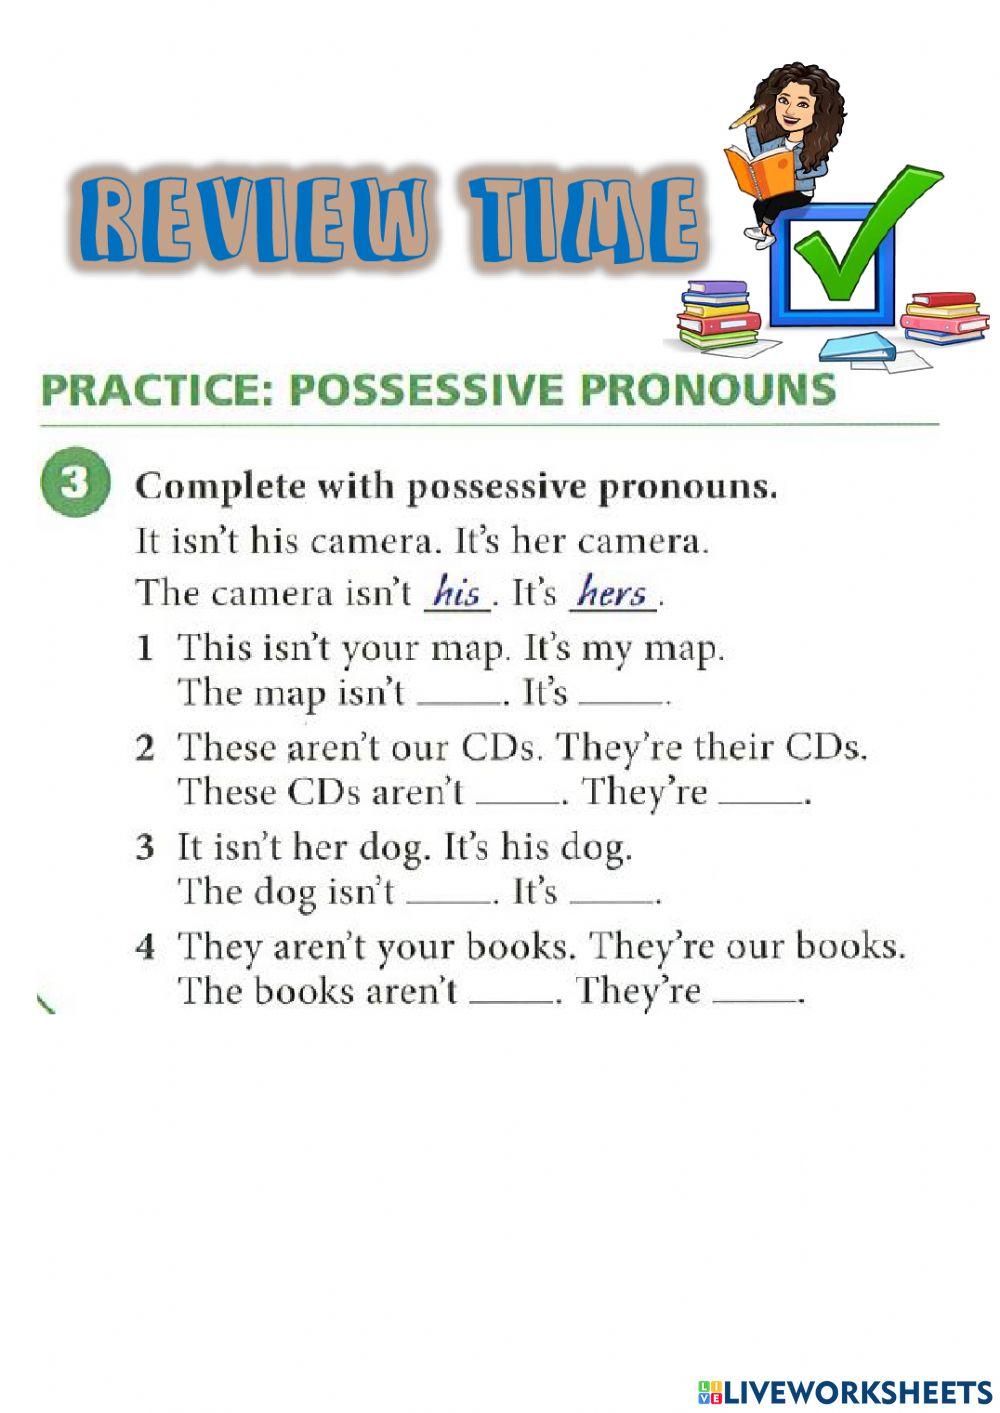 Possessive adjectives and pronouns